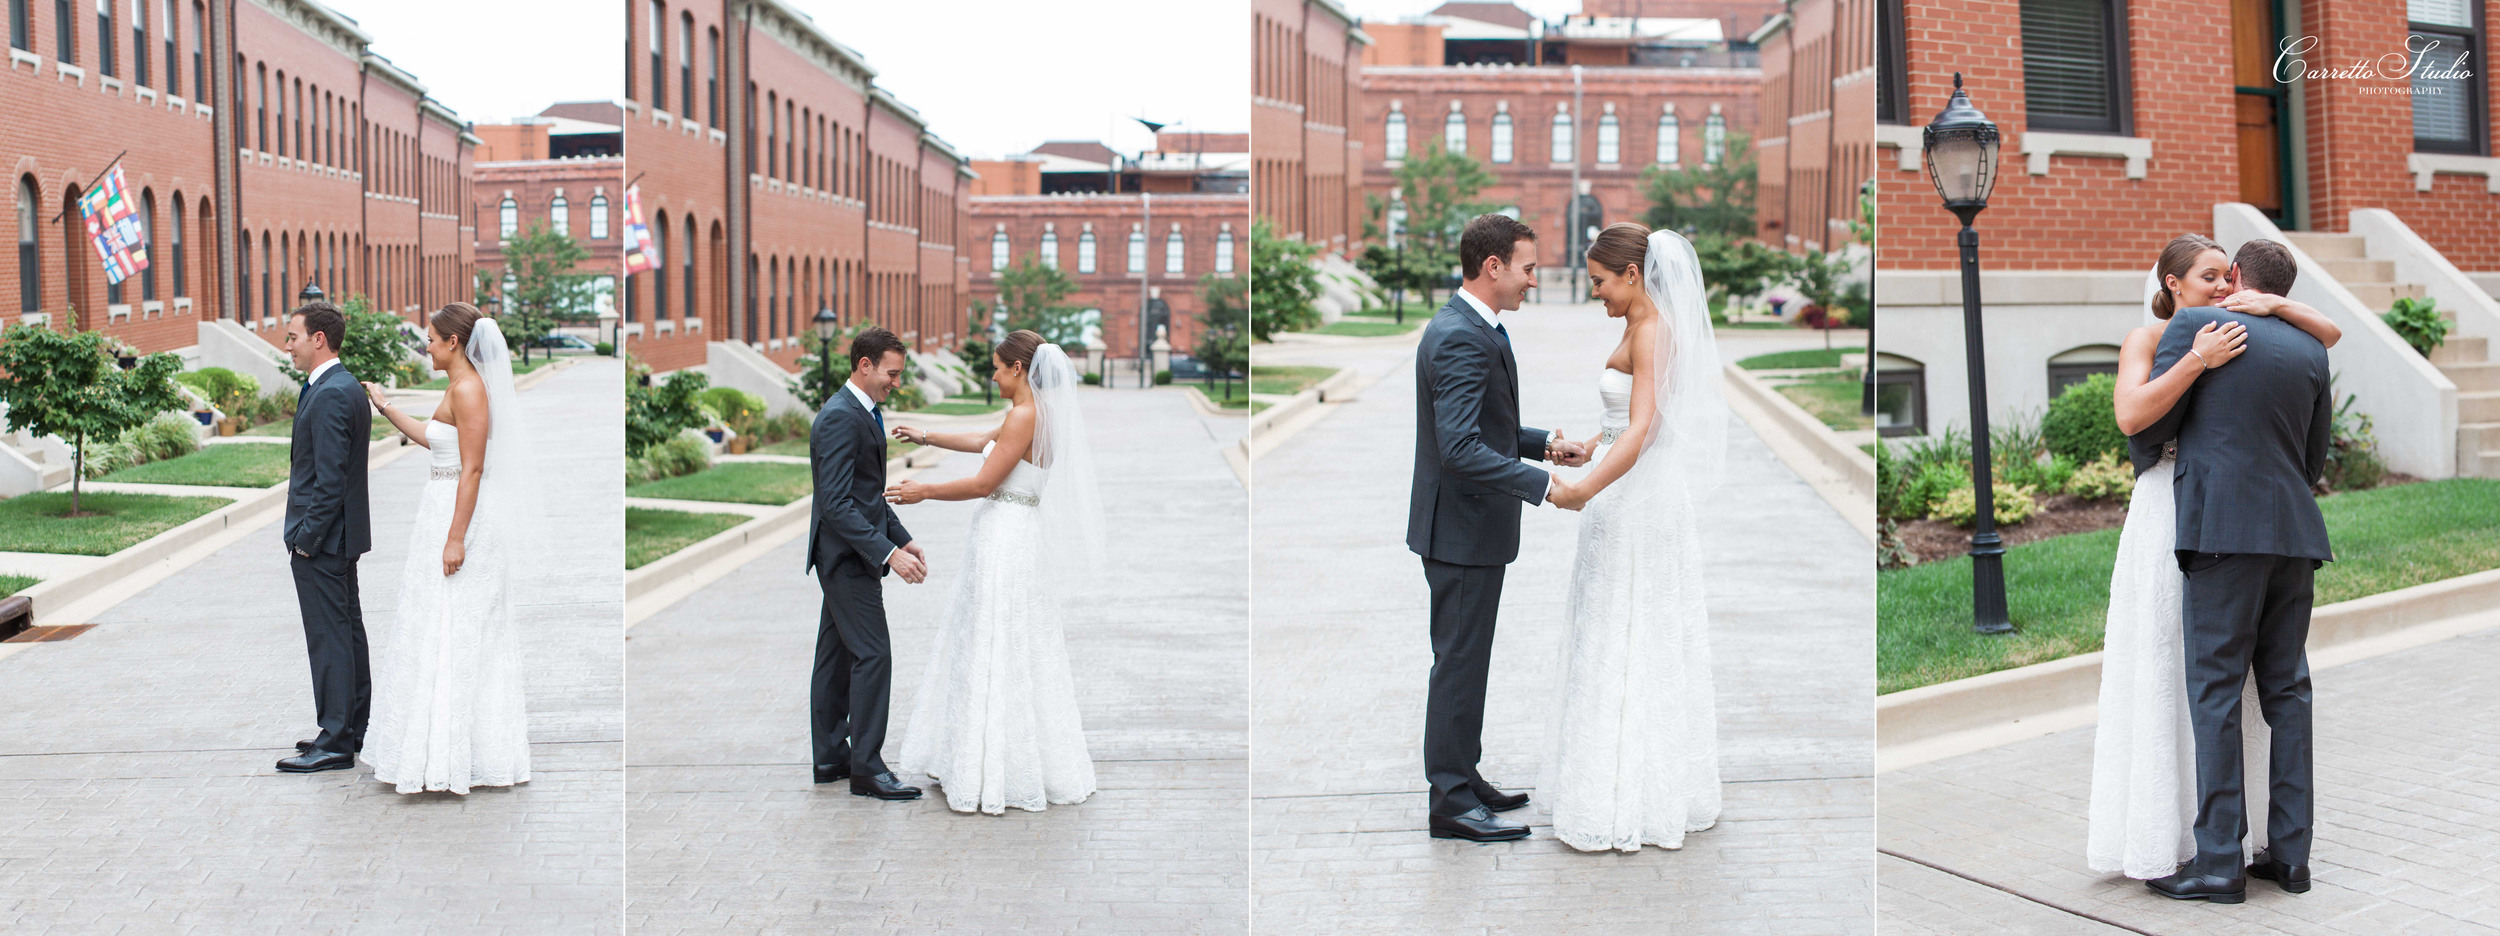 St Louis Wedding Photography-1014.jpg